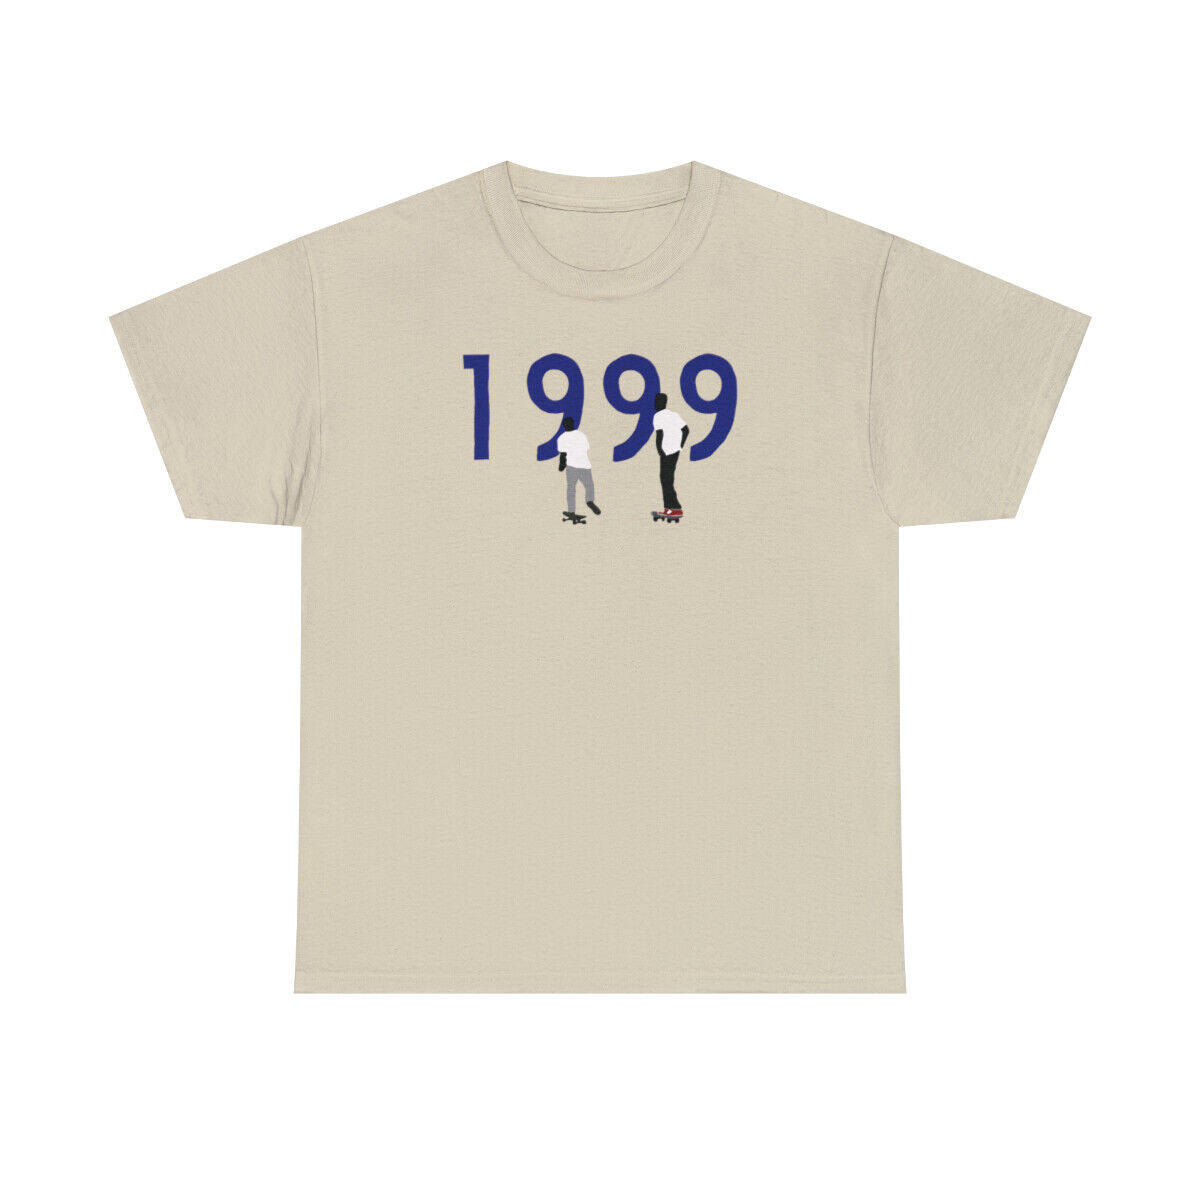 Vintage Joey Badass 1999 Crewneck Shirt Hip-Hop OFWGKTA Merch, Sand Tshirt